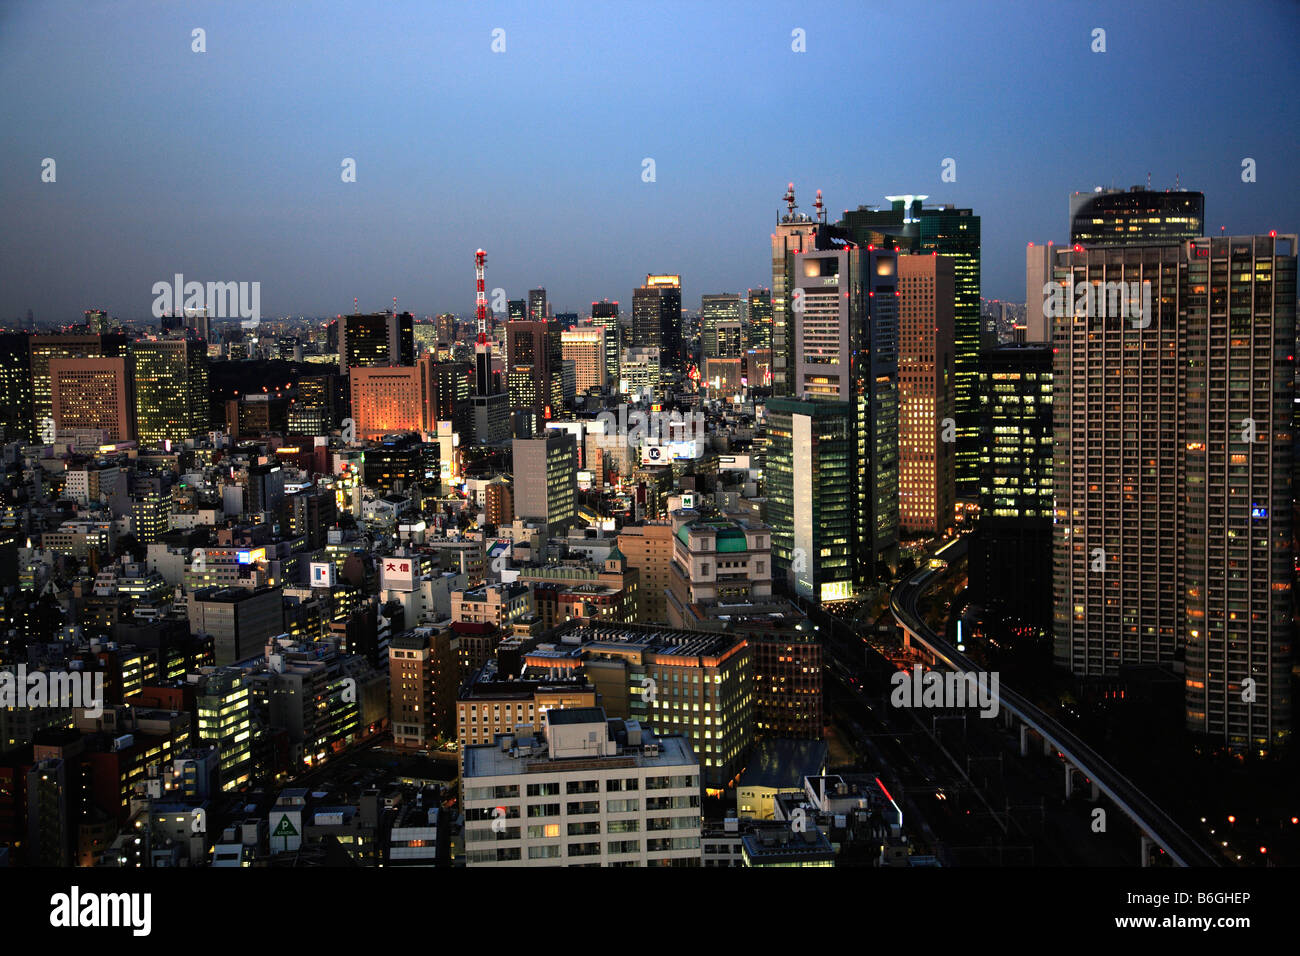 Japan Tokyo skyline at night general aerial view Stock Photo